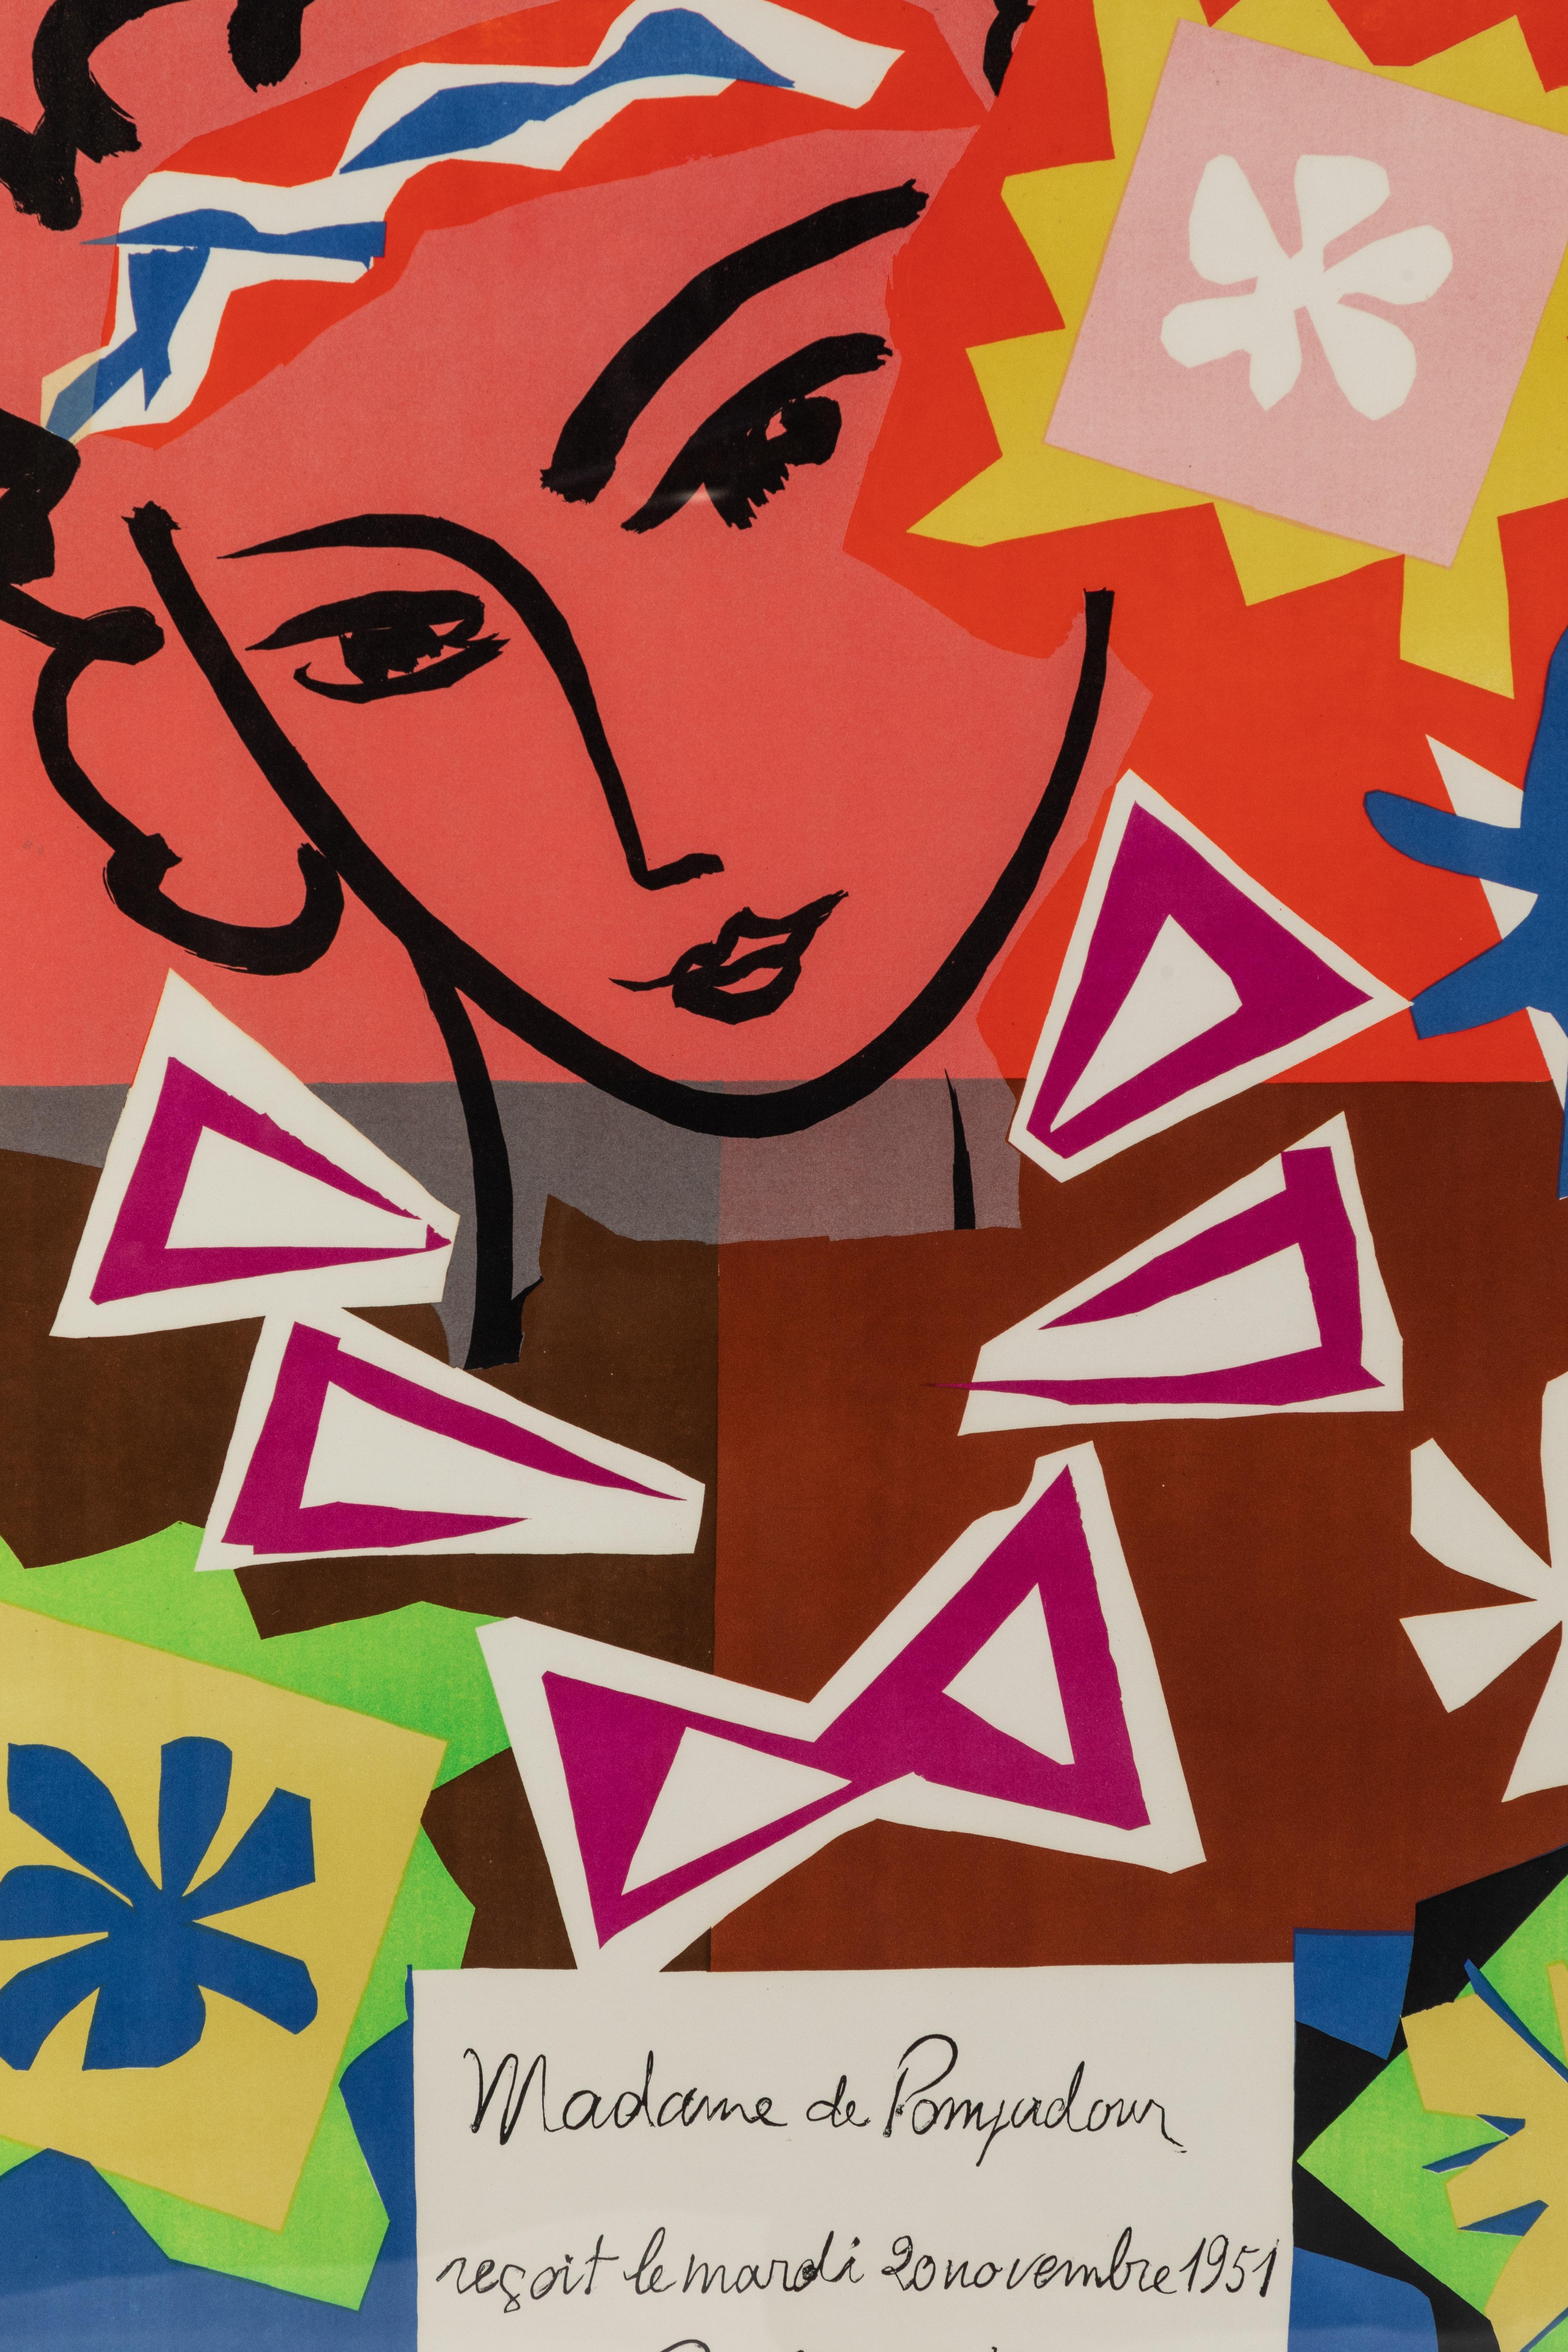 Mid-20th Century Madame Pompadour, vintage poster designed by Matisse